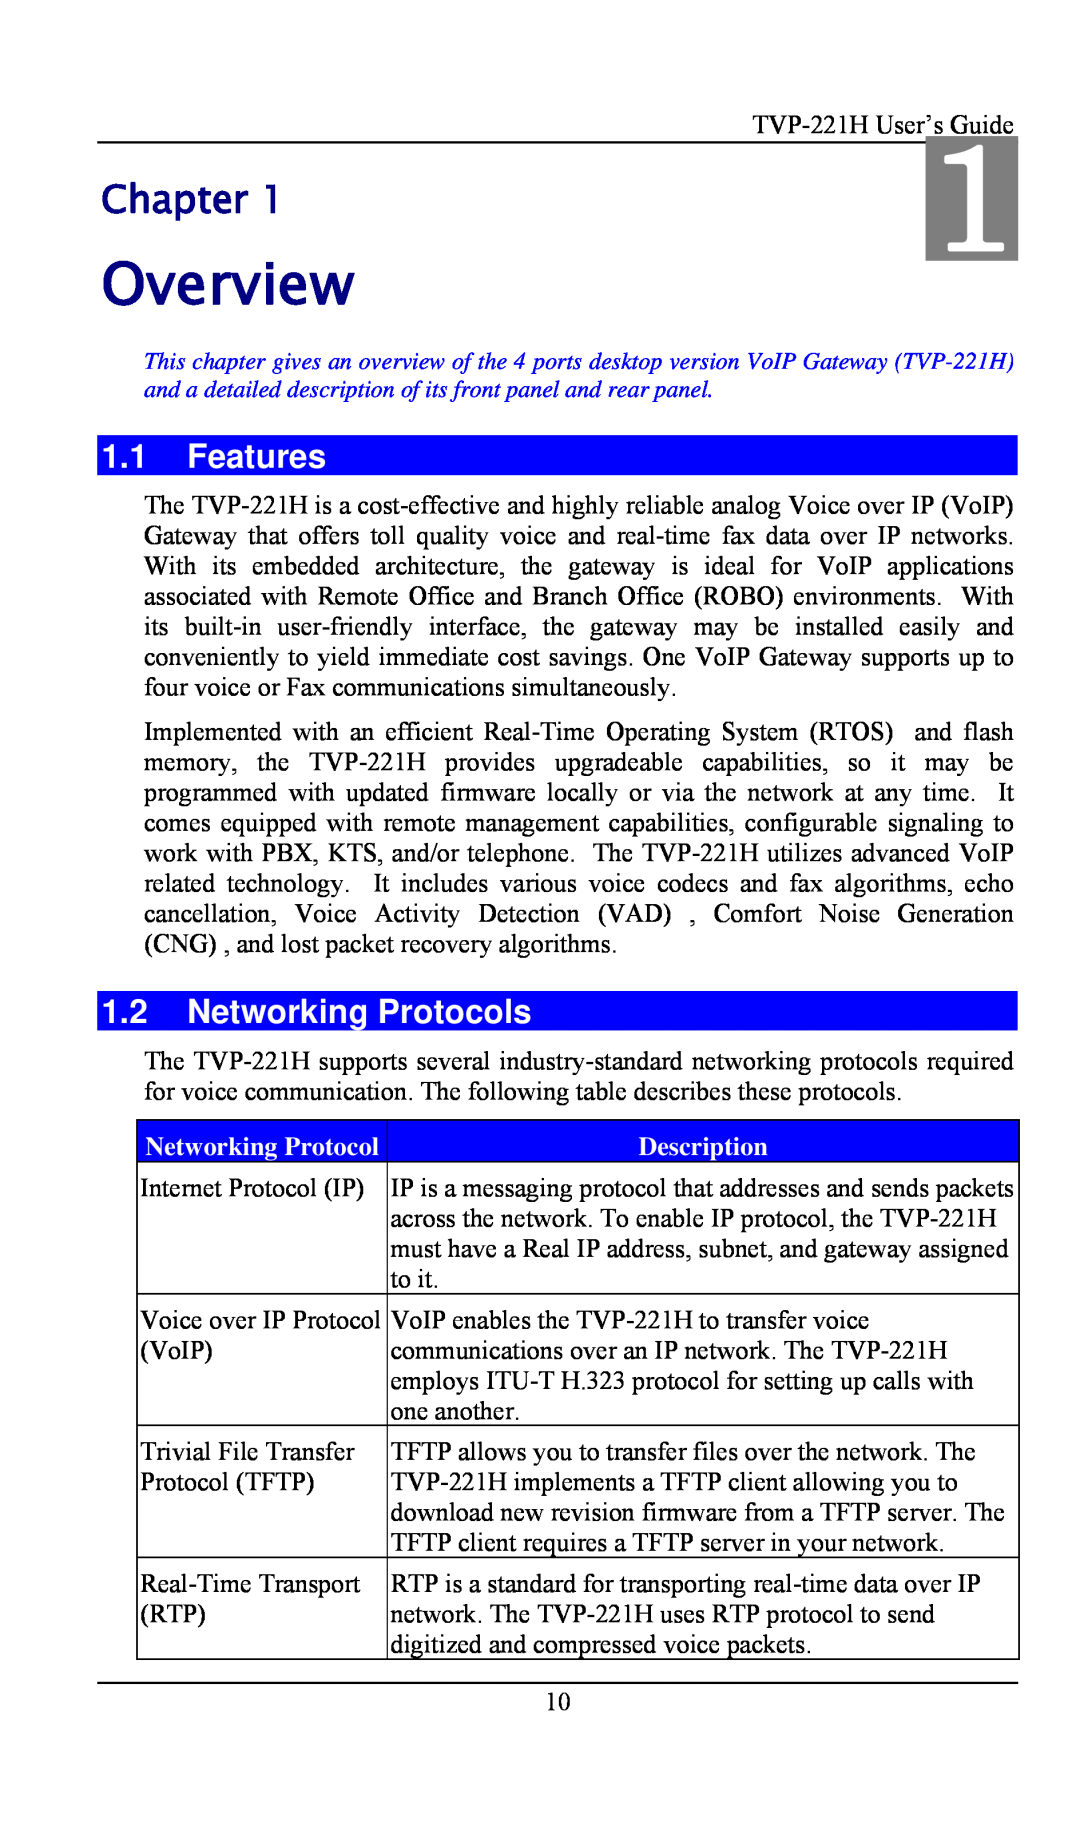 TRENDnet TVP- 221H, VoIP Gateway manual Overview, Chapter, Features, Networking Protocols, Description 